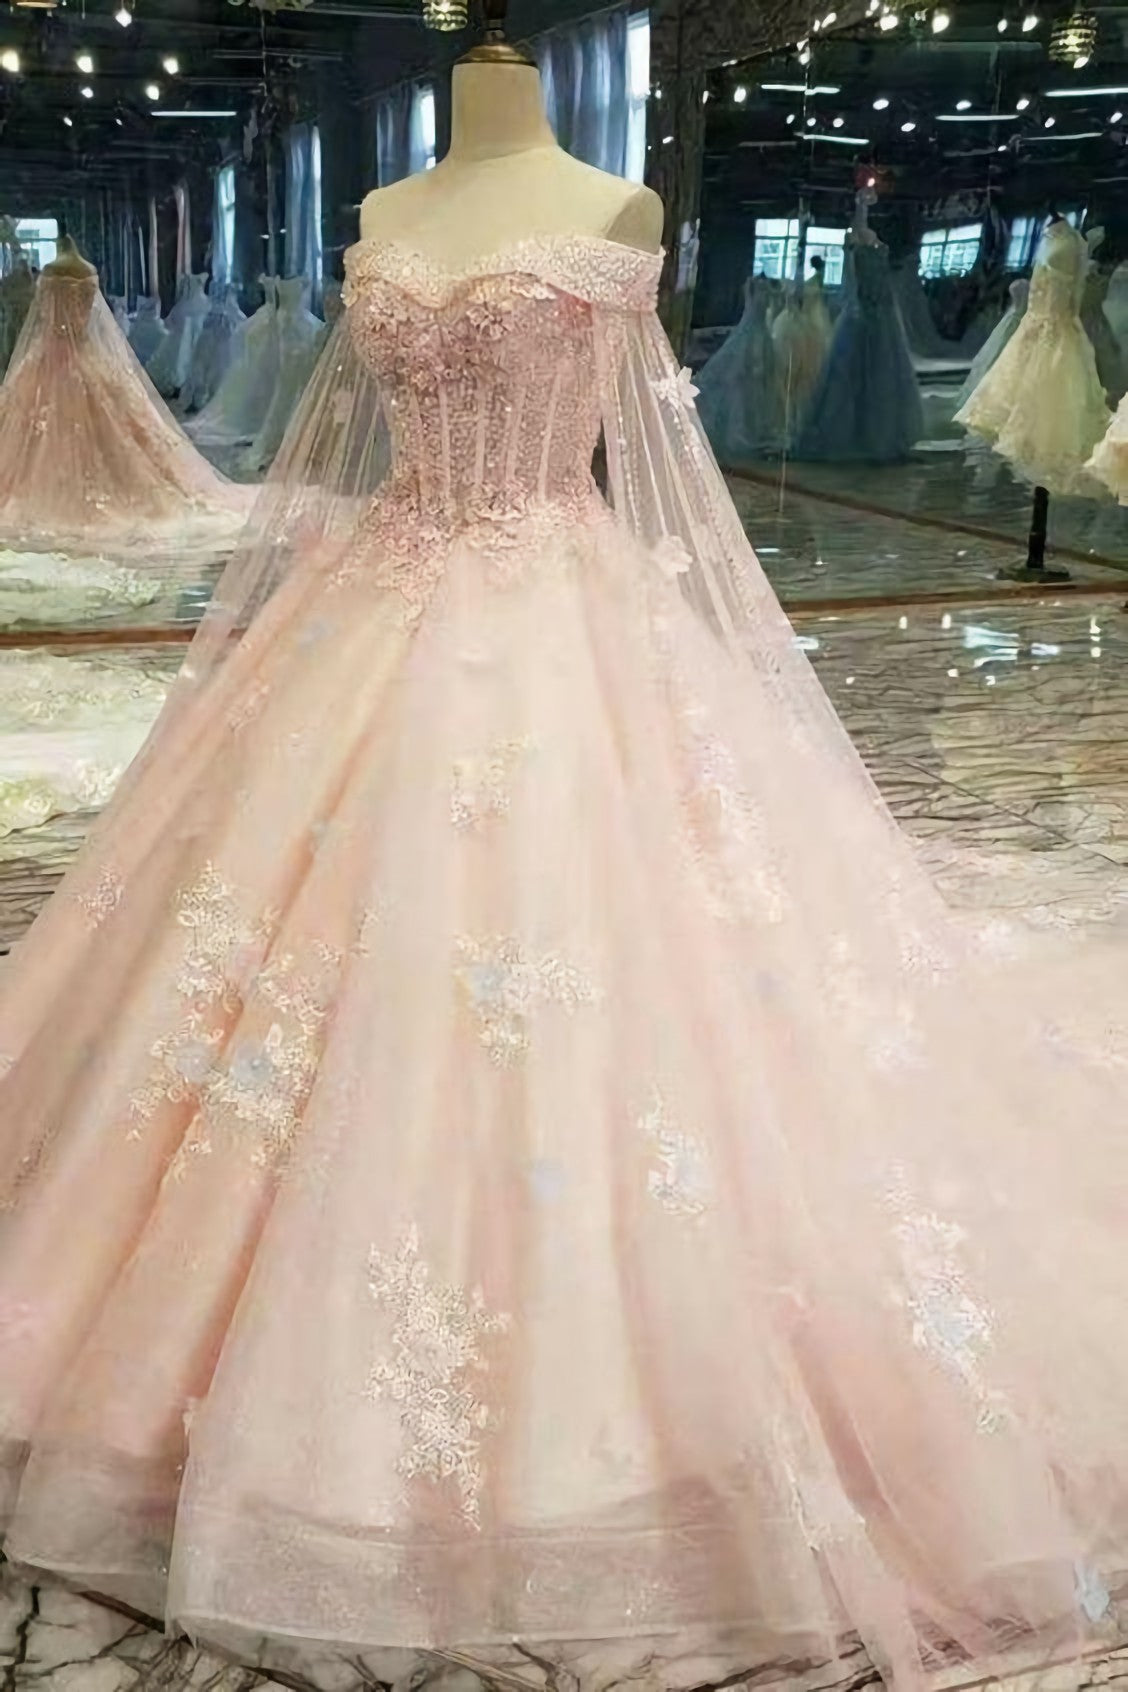 Senior Prom Dress, Wedding Dress, With Lace Applique